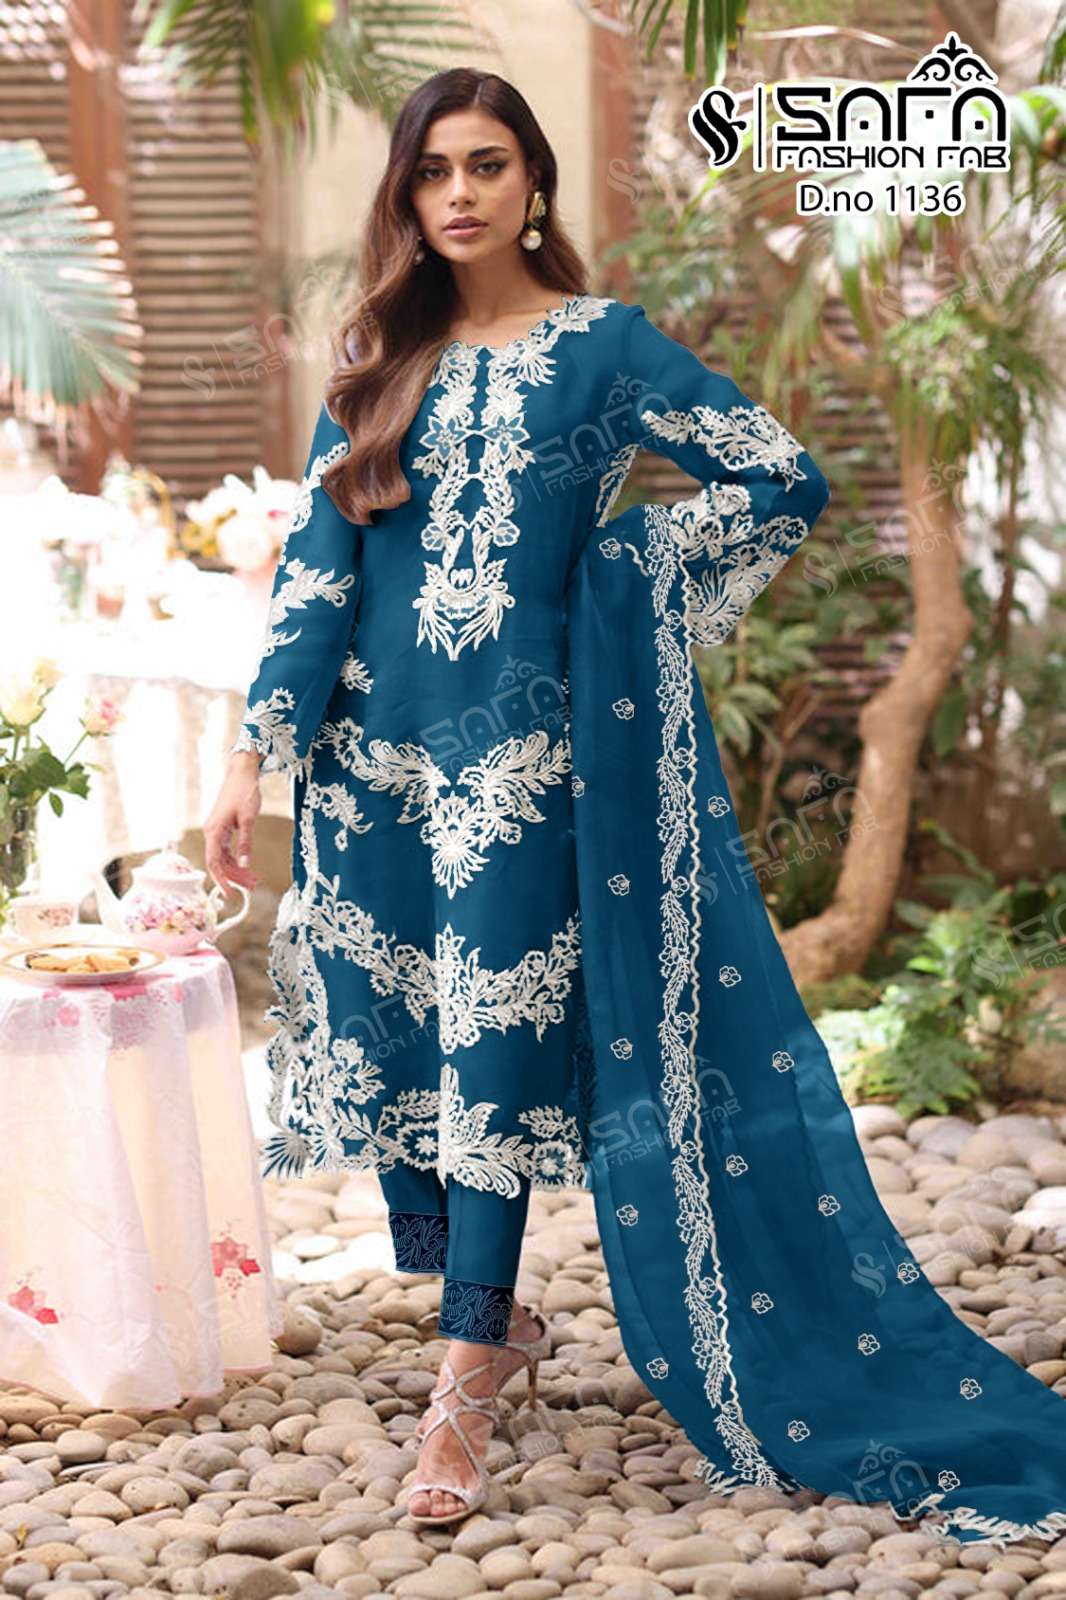 Safa Fashion 1136 Ready Made Pakisatni Suits wholesale  Collection online